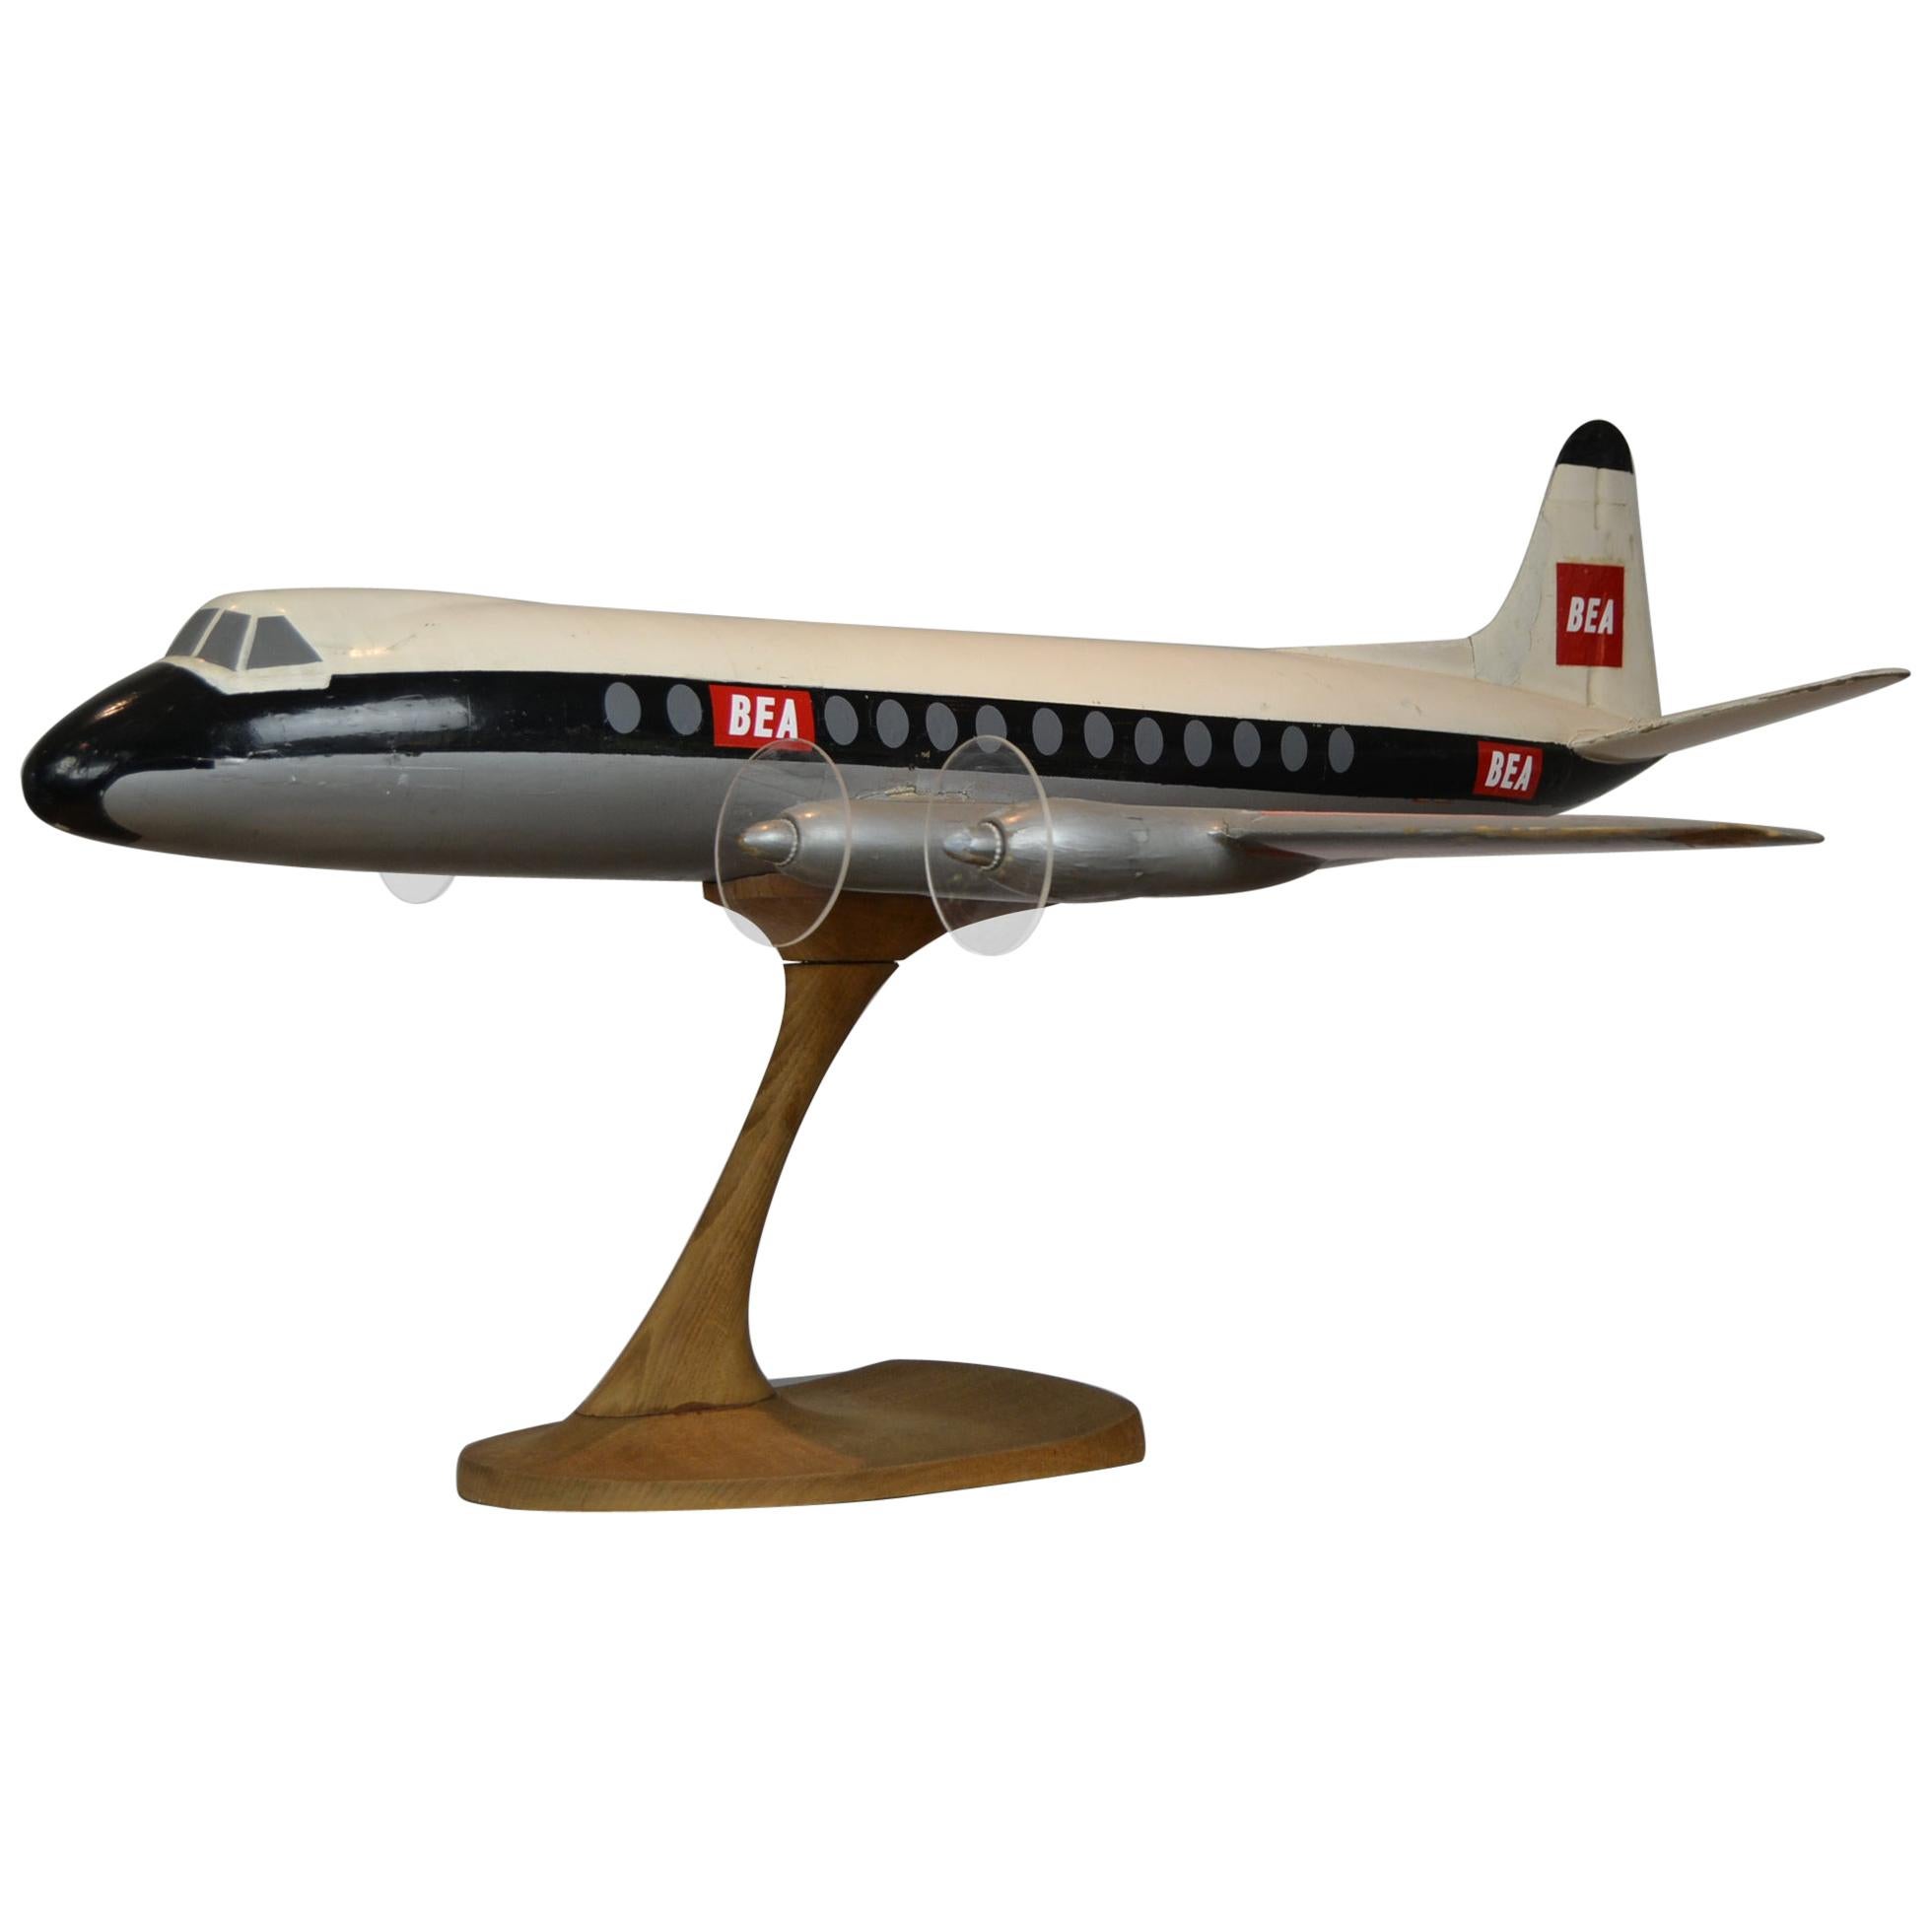 Vintage Large BEA Wooden Aeroplane Display, British European Airways, 1950s